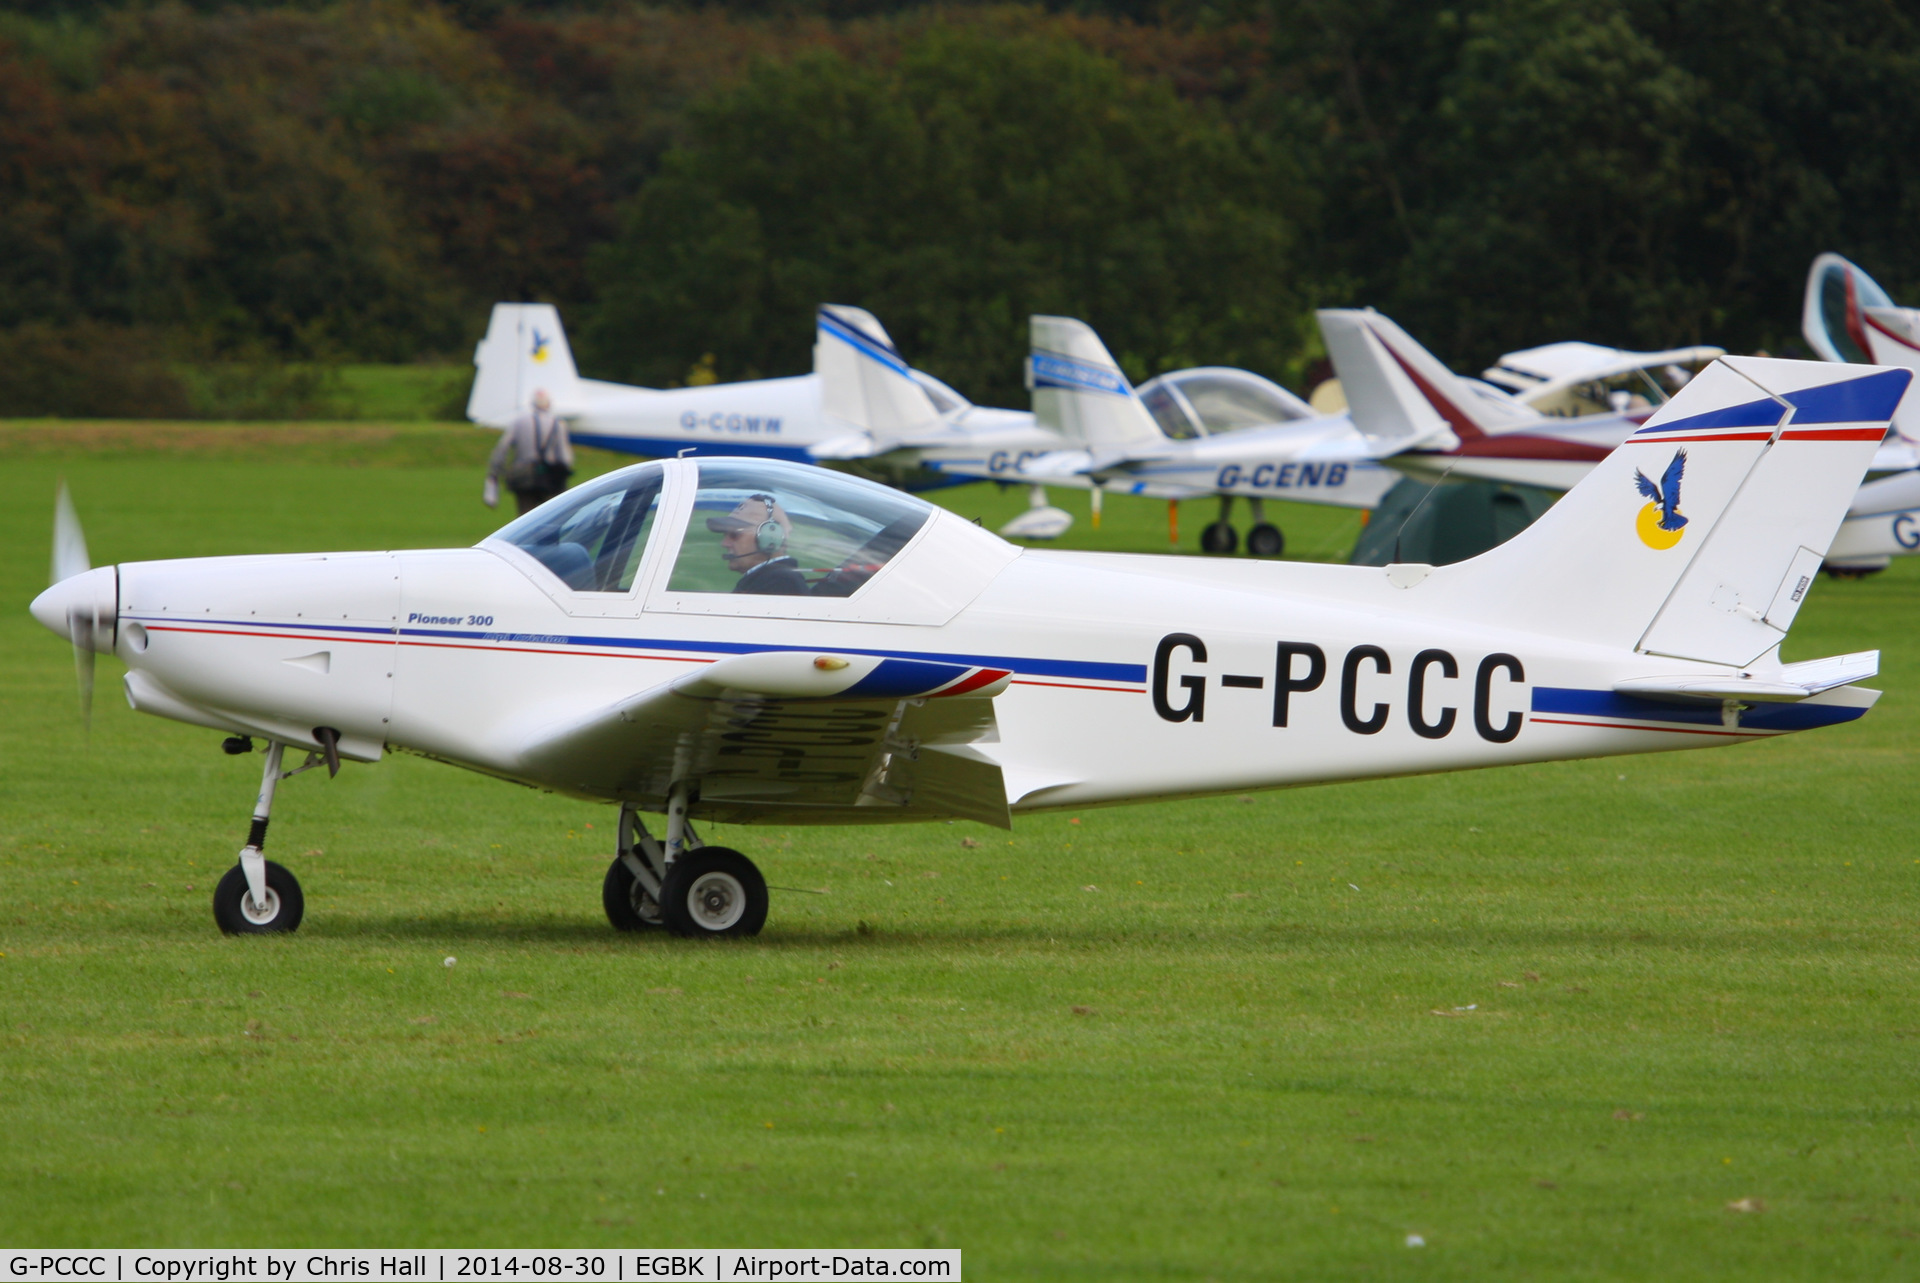 G-PCCC, 2004 Alpi Aviation Pioneer 300 C/N PFA 330-14220, at the LAA Rally 2014, Sywell